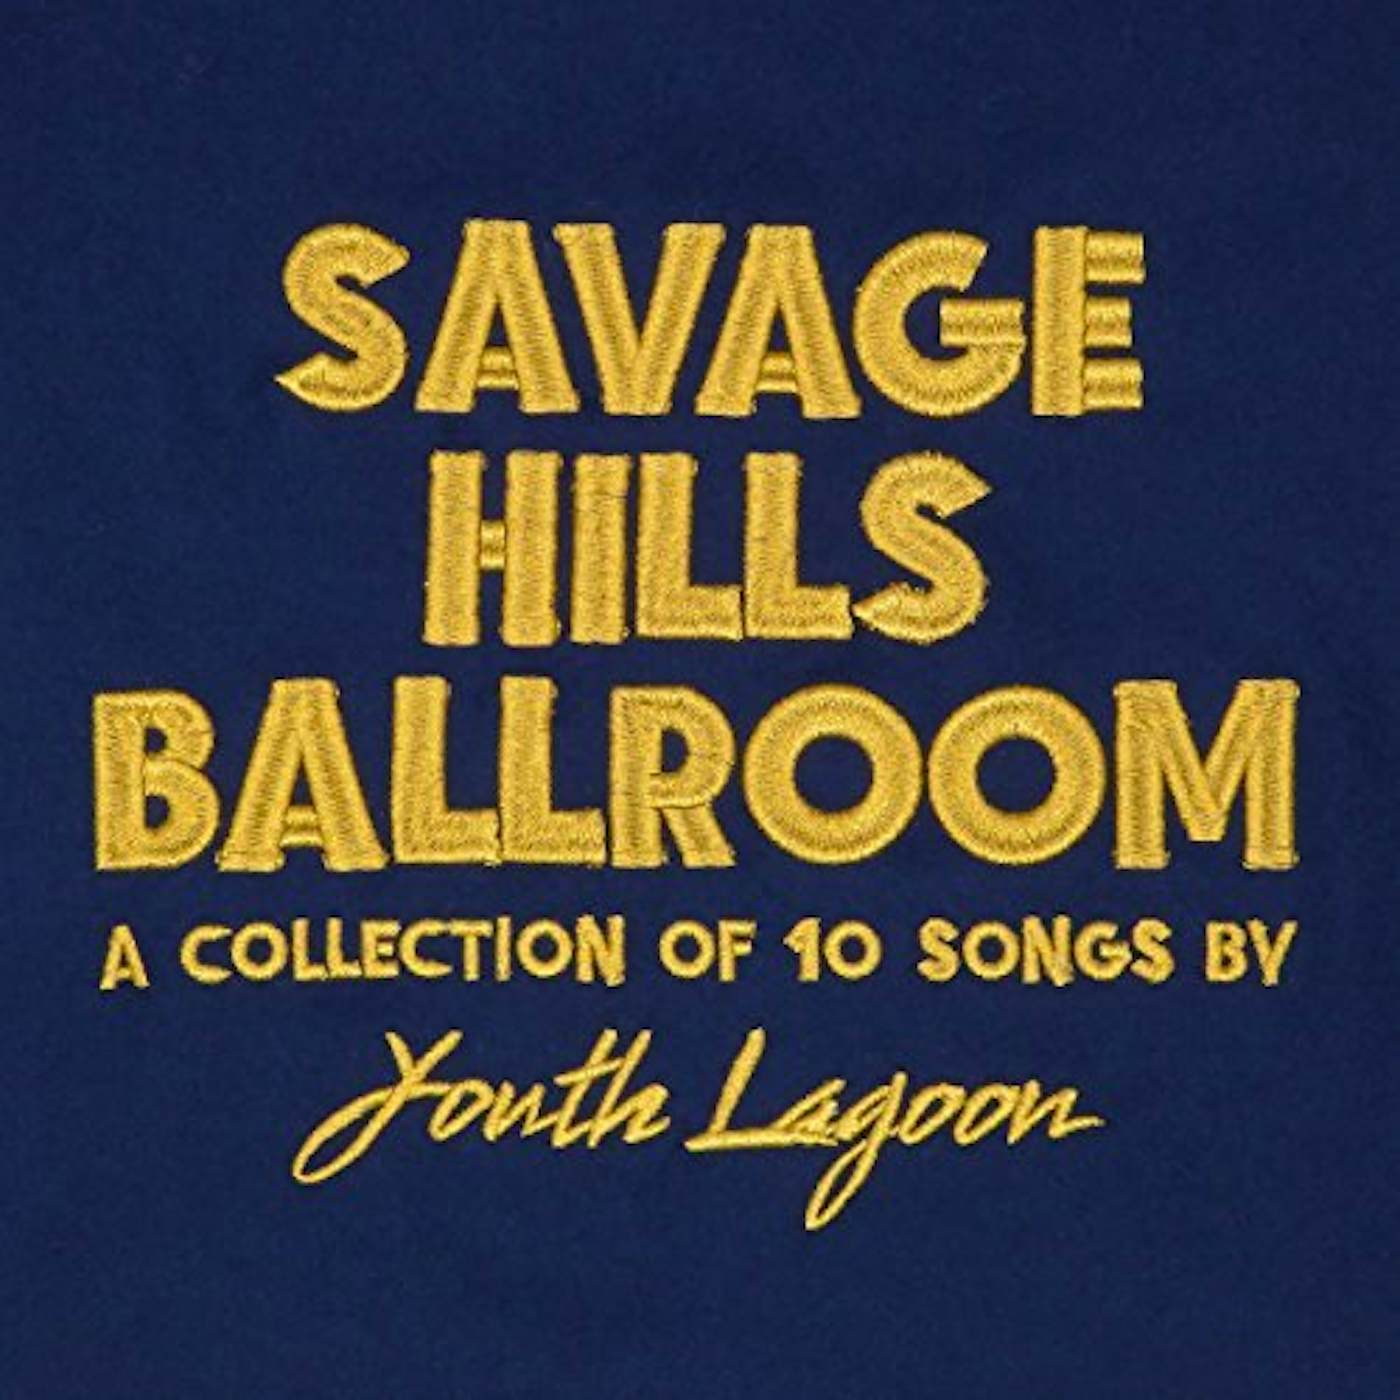 Youth Lagoon SAVAGE HILLS BALLROOM CD